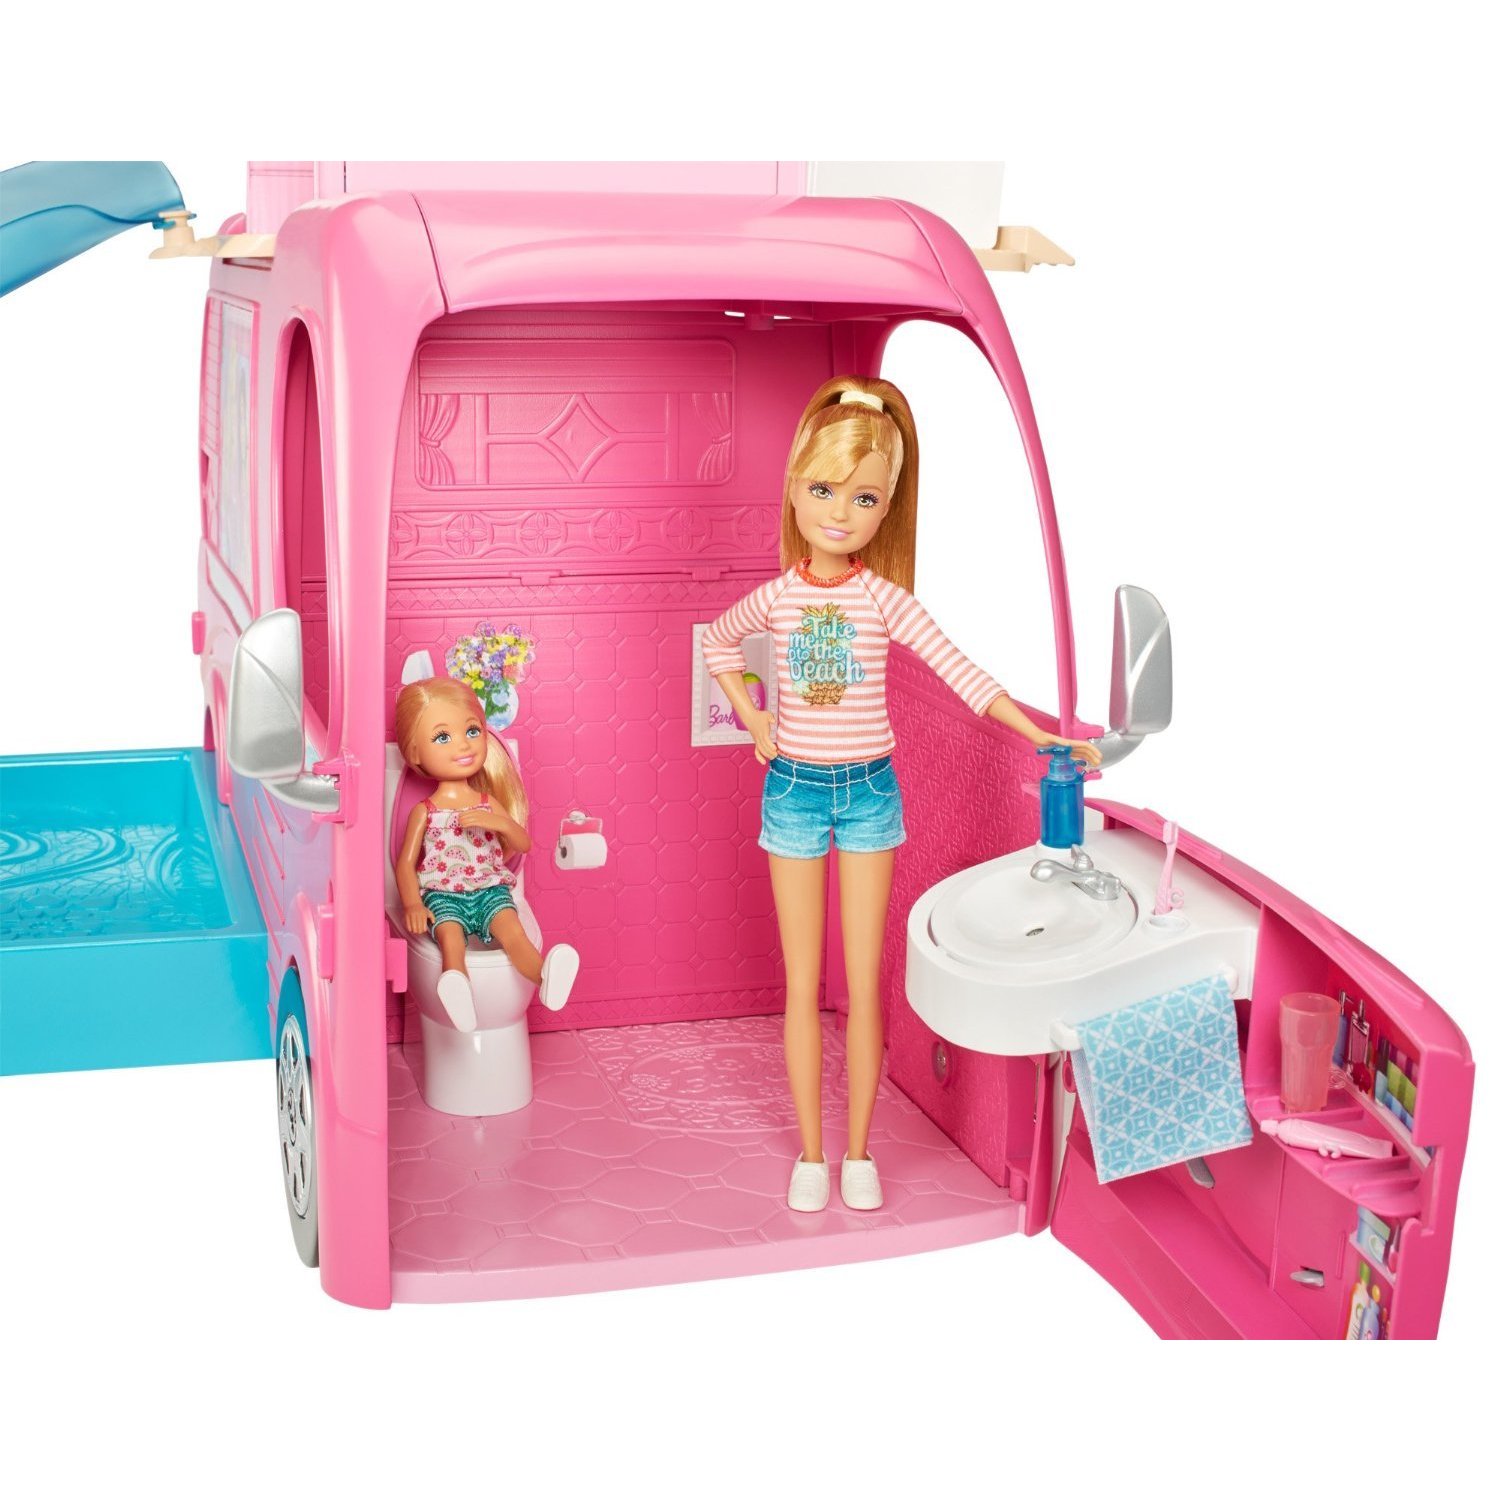 Barbie Pink Pop-up Camper Toy - Bed Bath & Beyond - 10150855